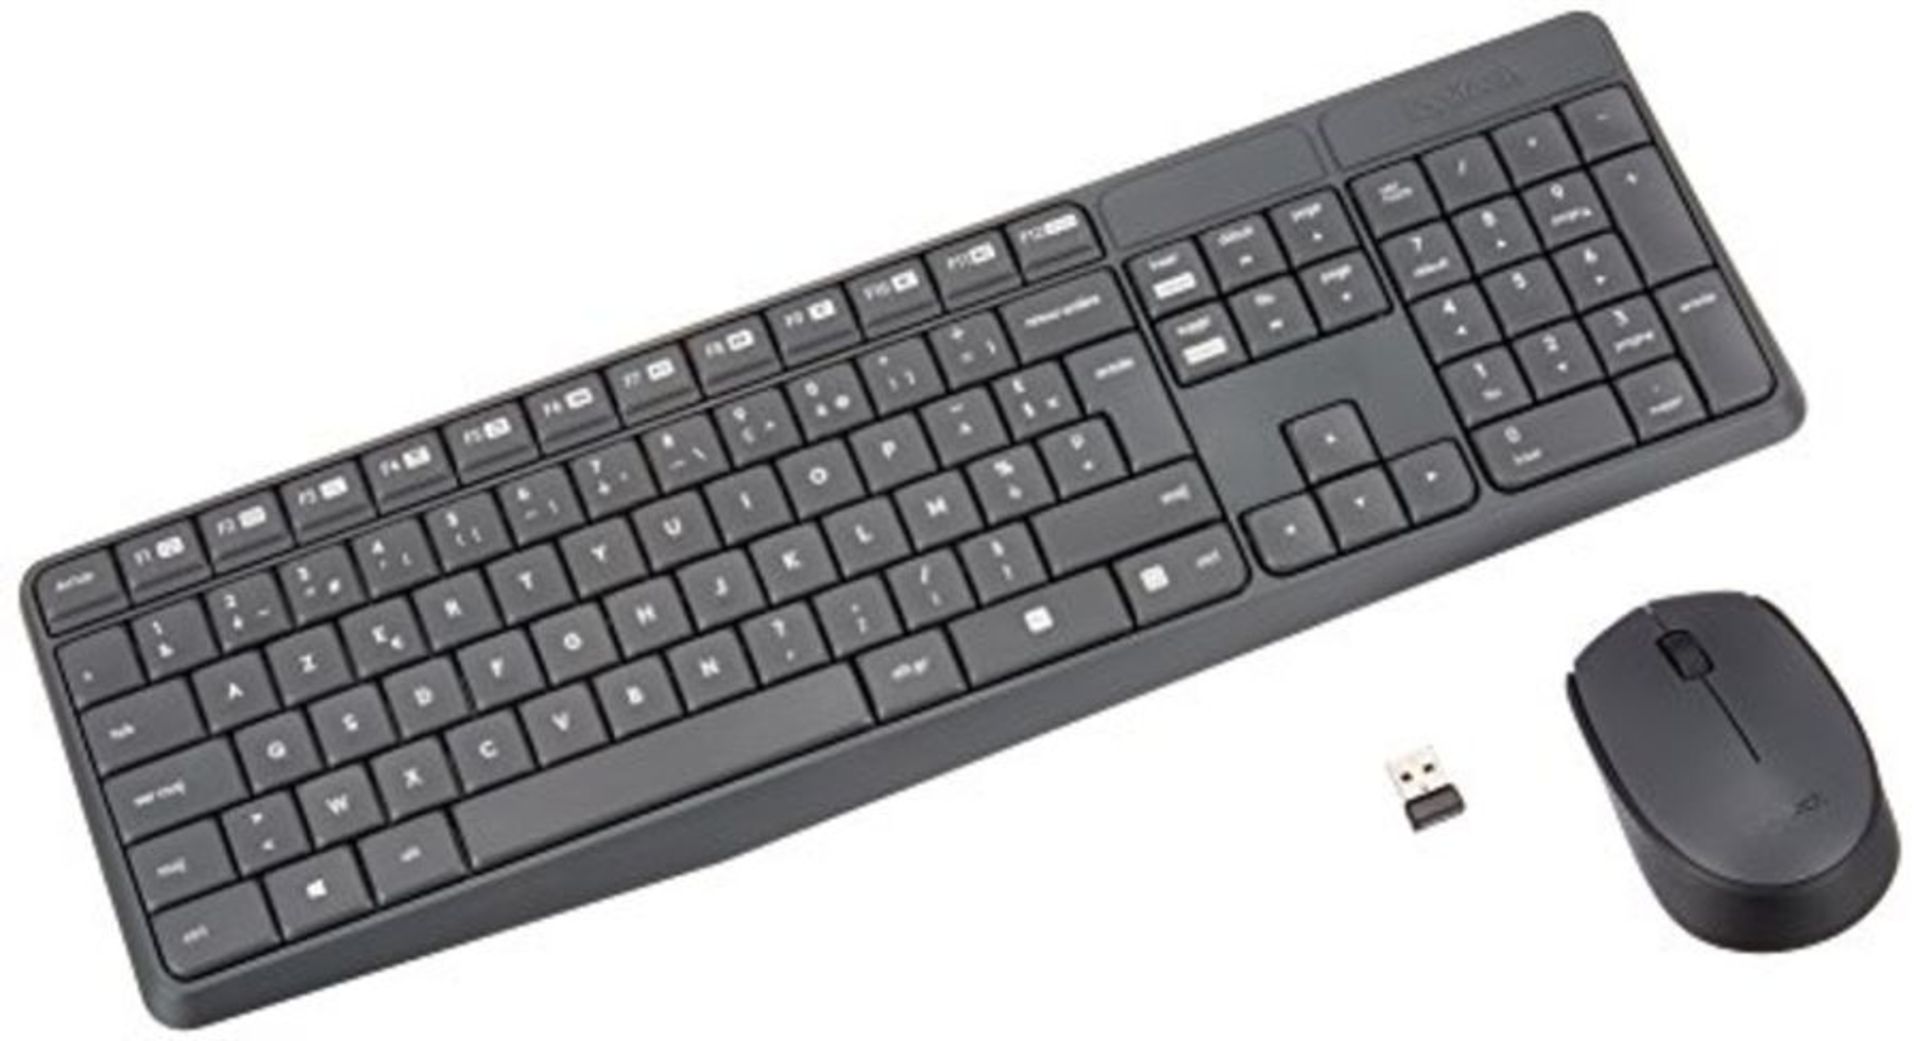 Logitech MK235 Wireless Keyboard and Mouse Combo, AZERTY French Layout - Black - Image 4 of 6